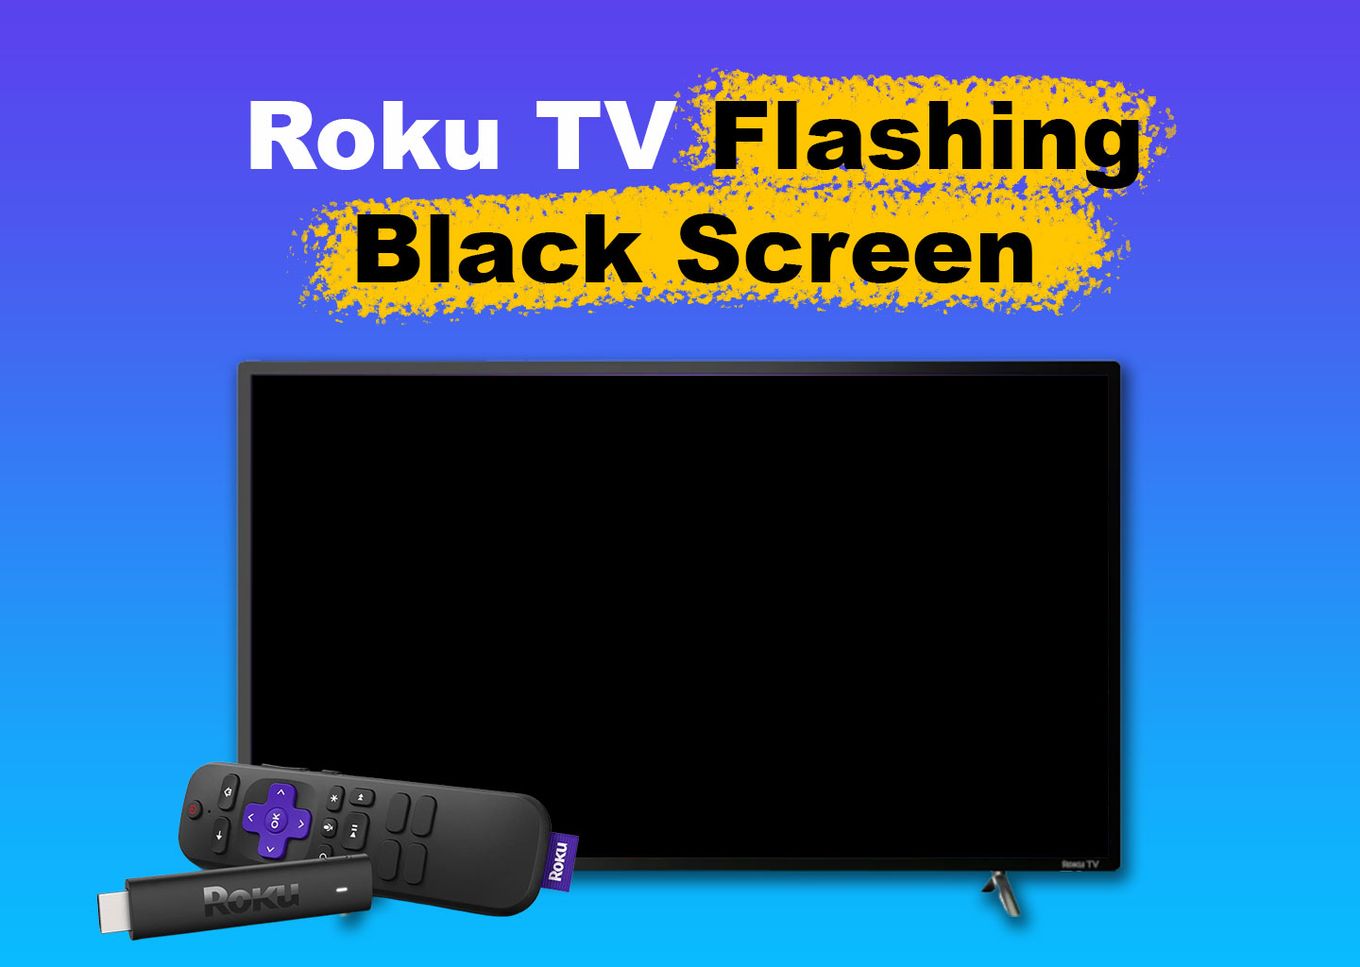 Roku TV Flashing Black Screen